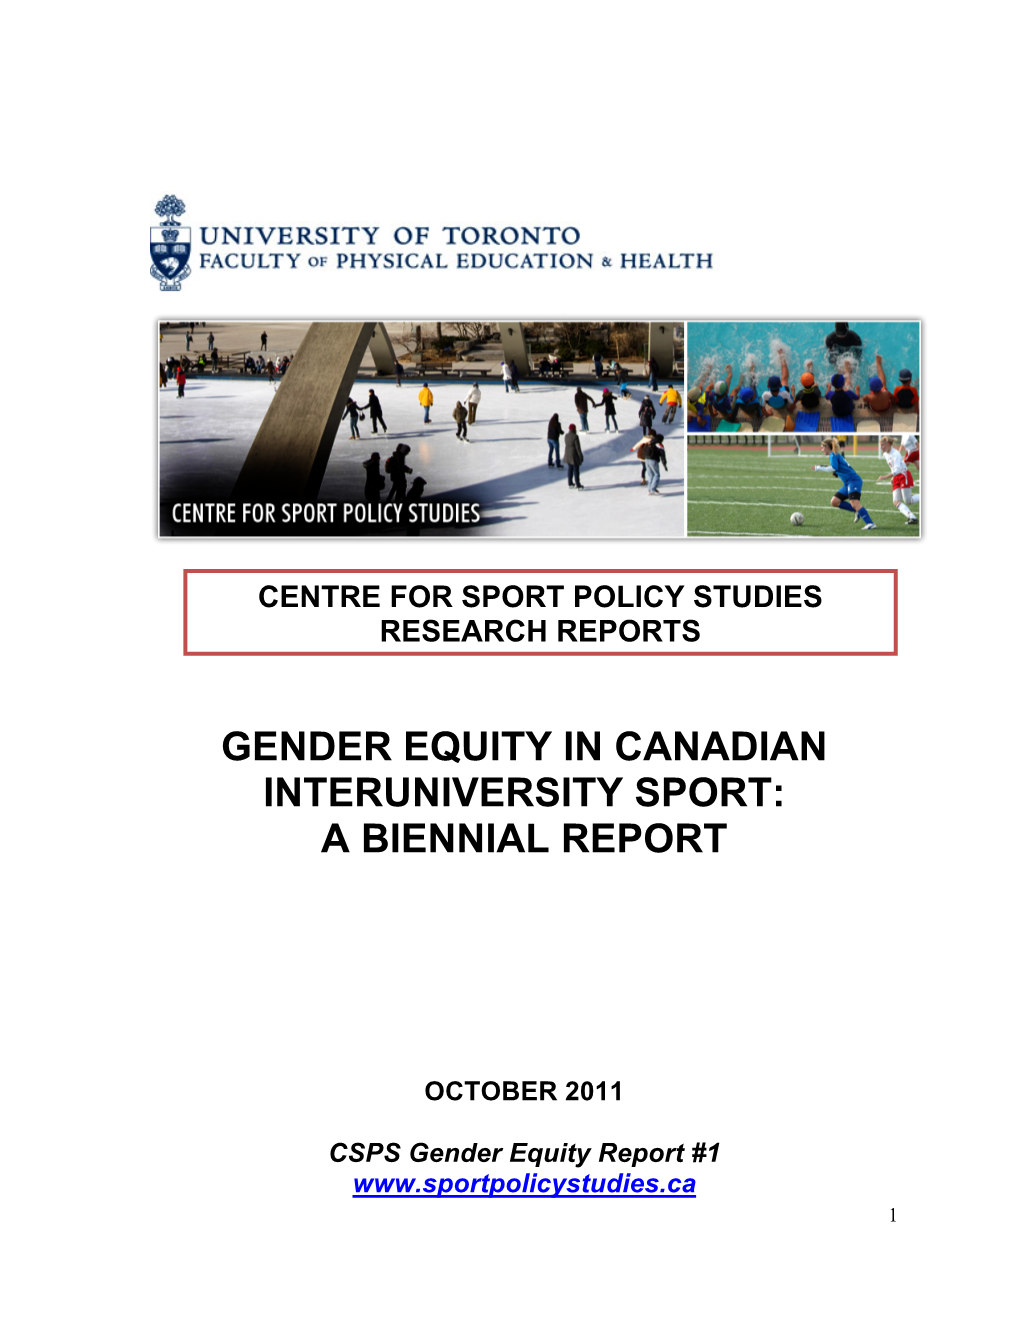 Gender Equity in Canadian Interuniversity Sport: a Biennial Report